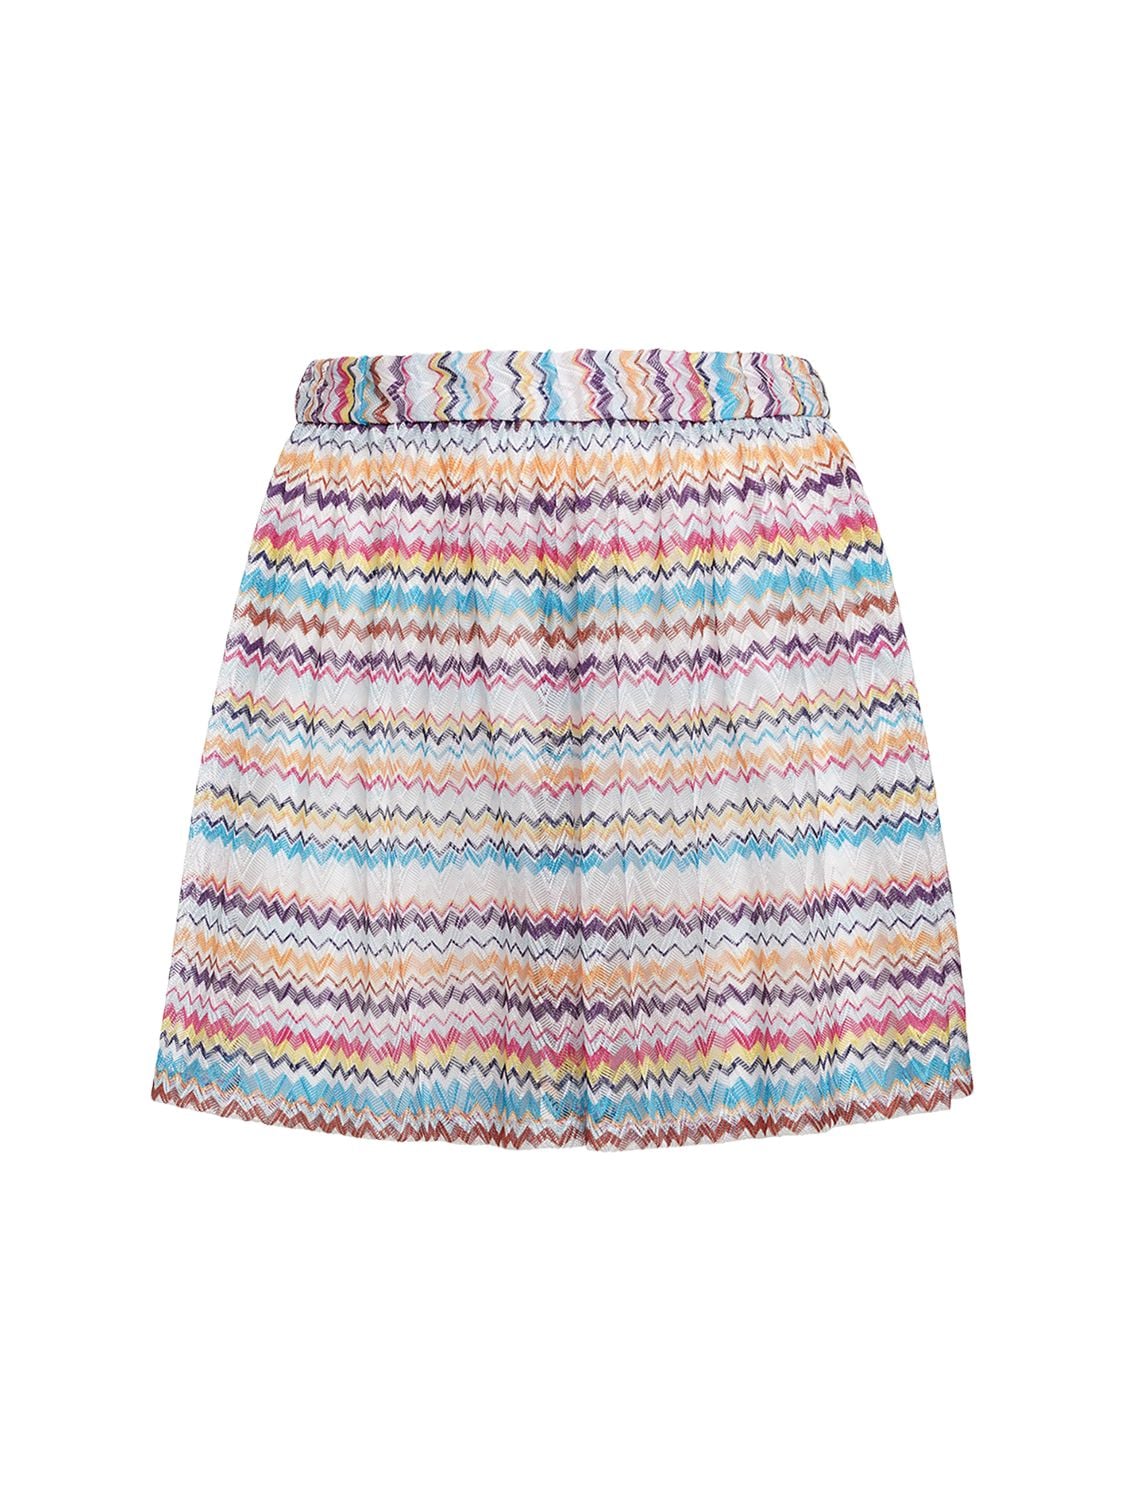 Image of Striped Chevron Mini Shorts